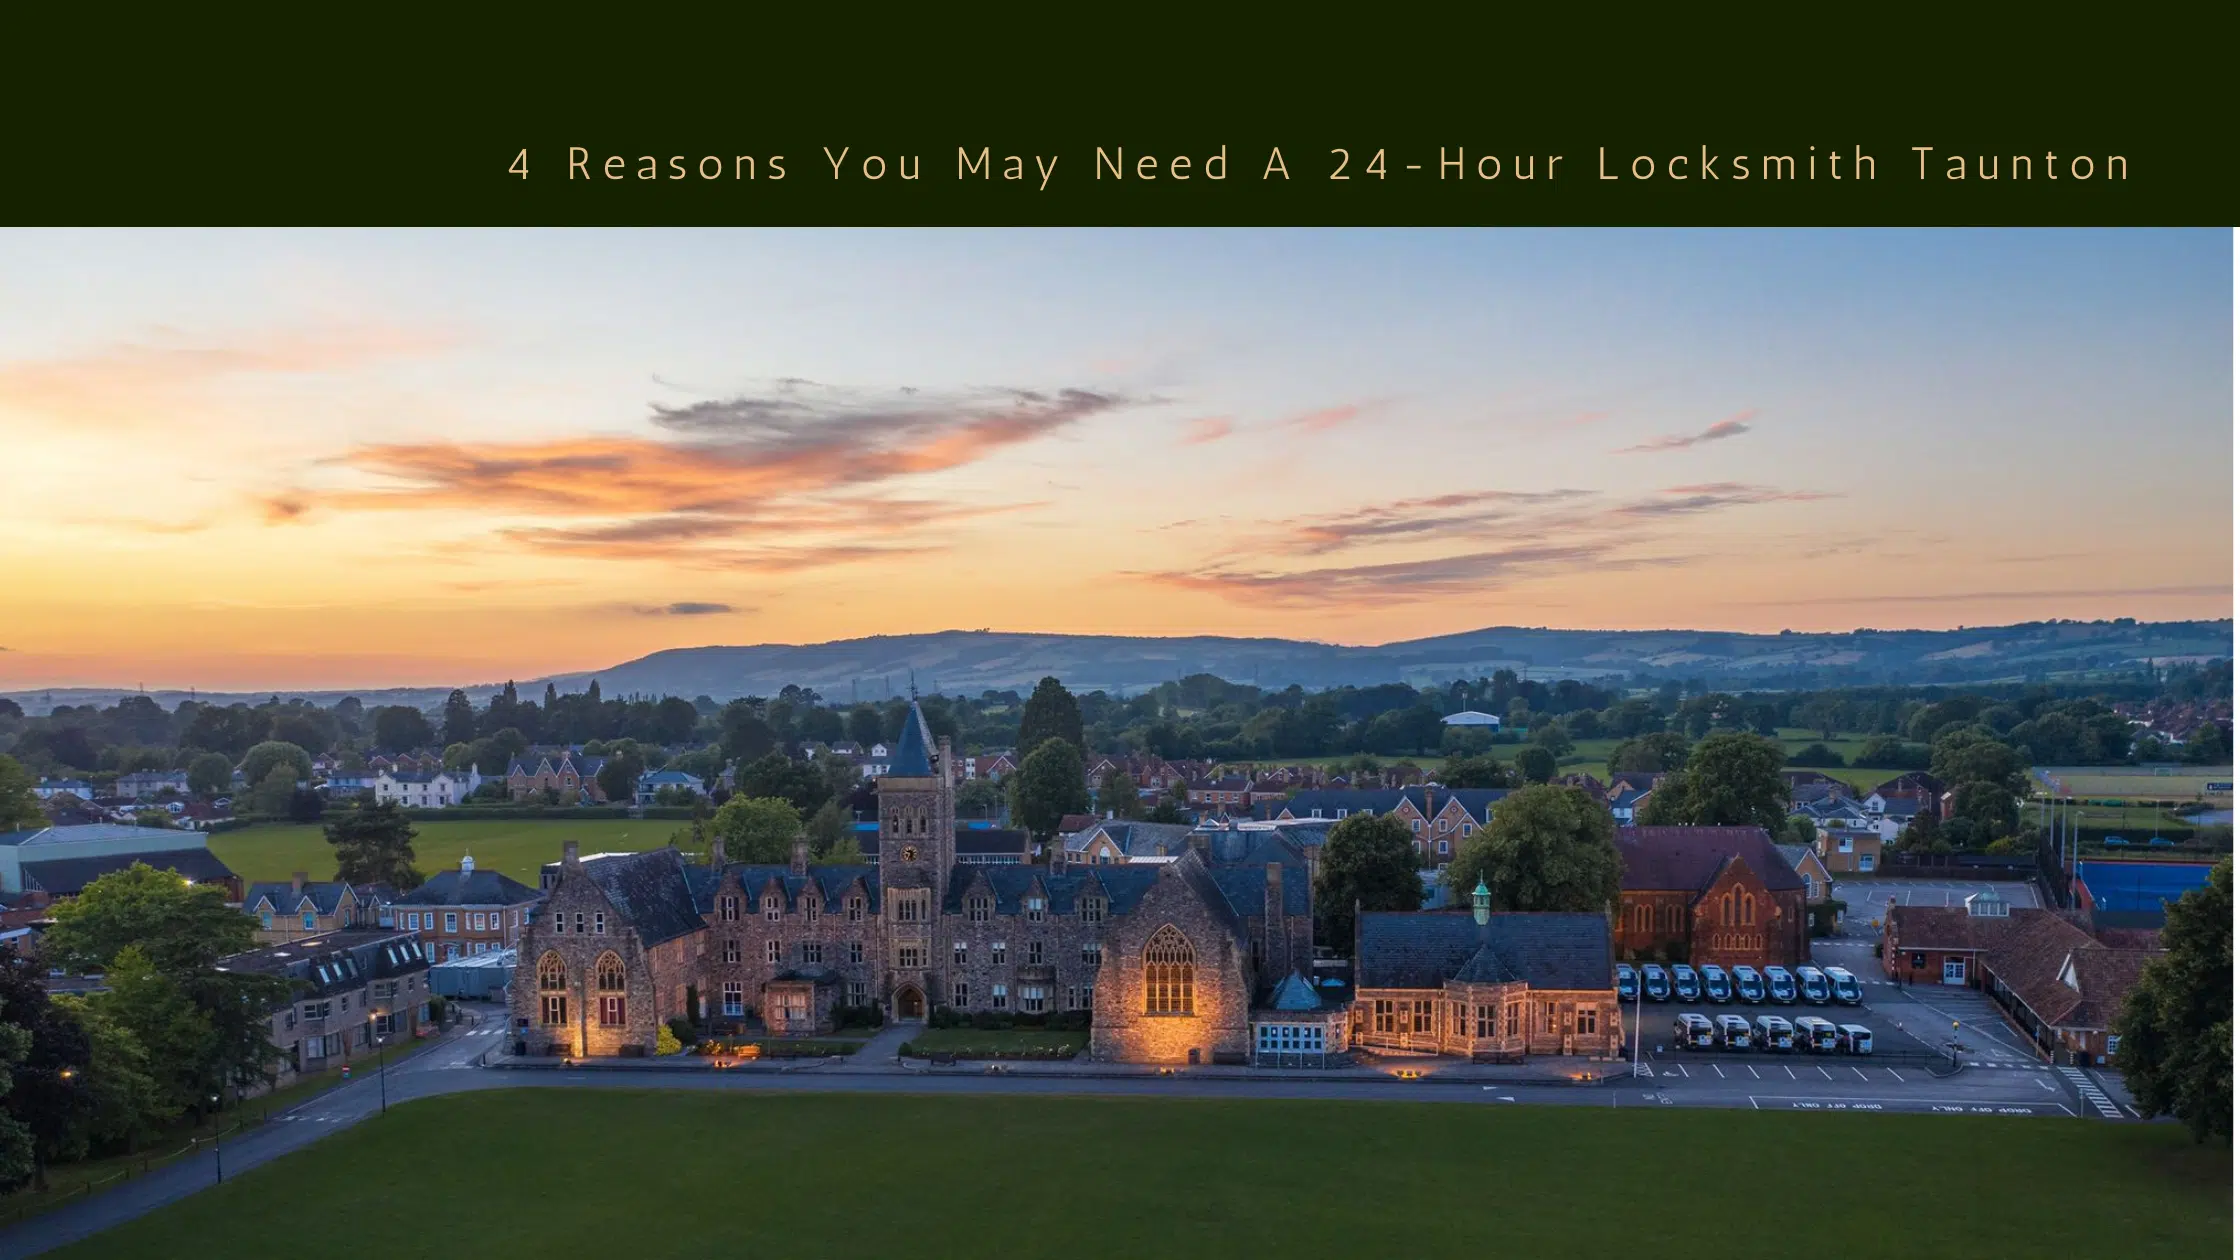 4 Reasons You May Need A 24-Hour Locksmith Taunton